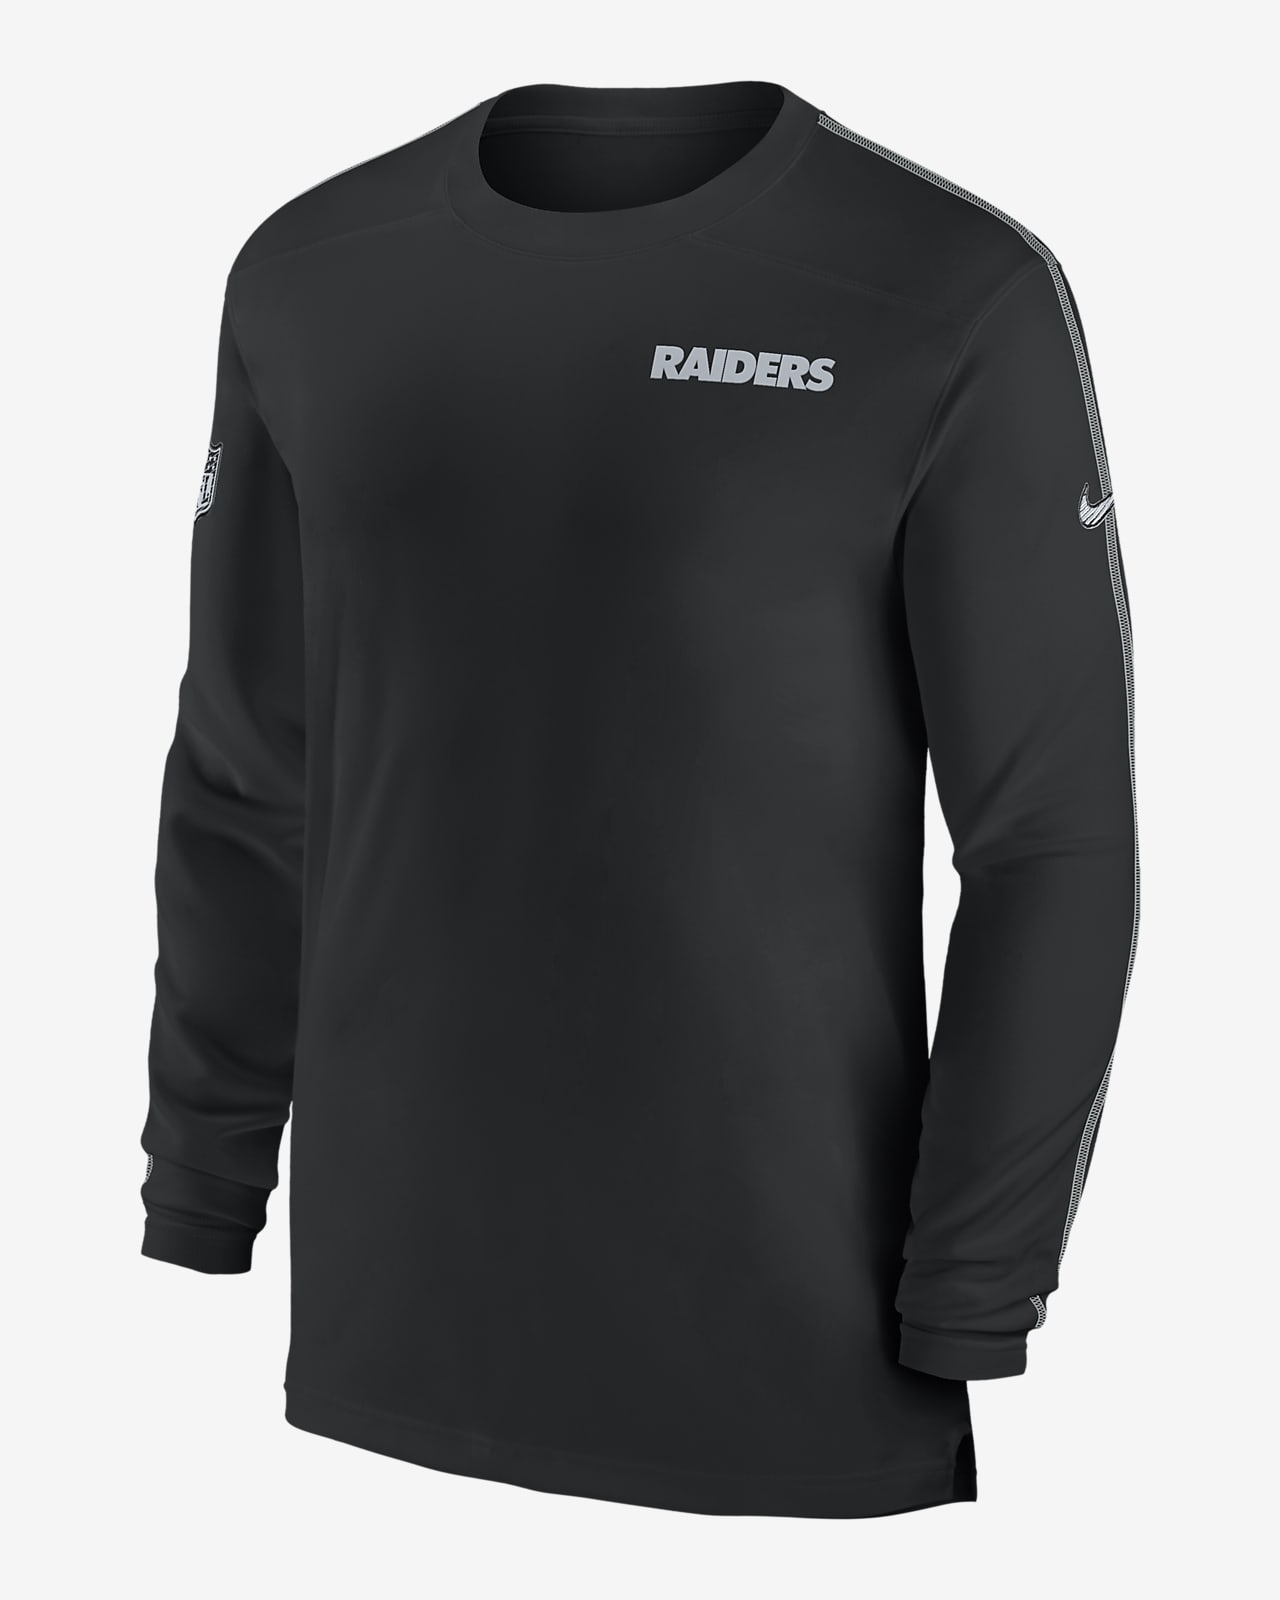 Las Vegas Raiders Sideline Coach Men's Nike Dri-FIT NFL Long-Sleeve Top